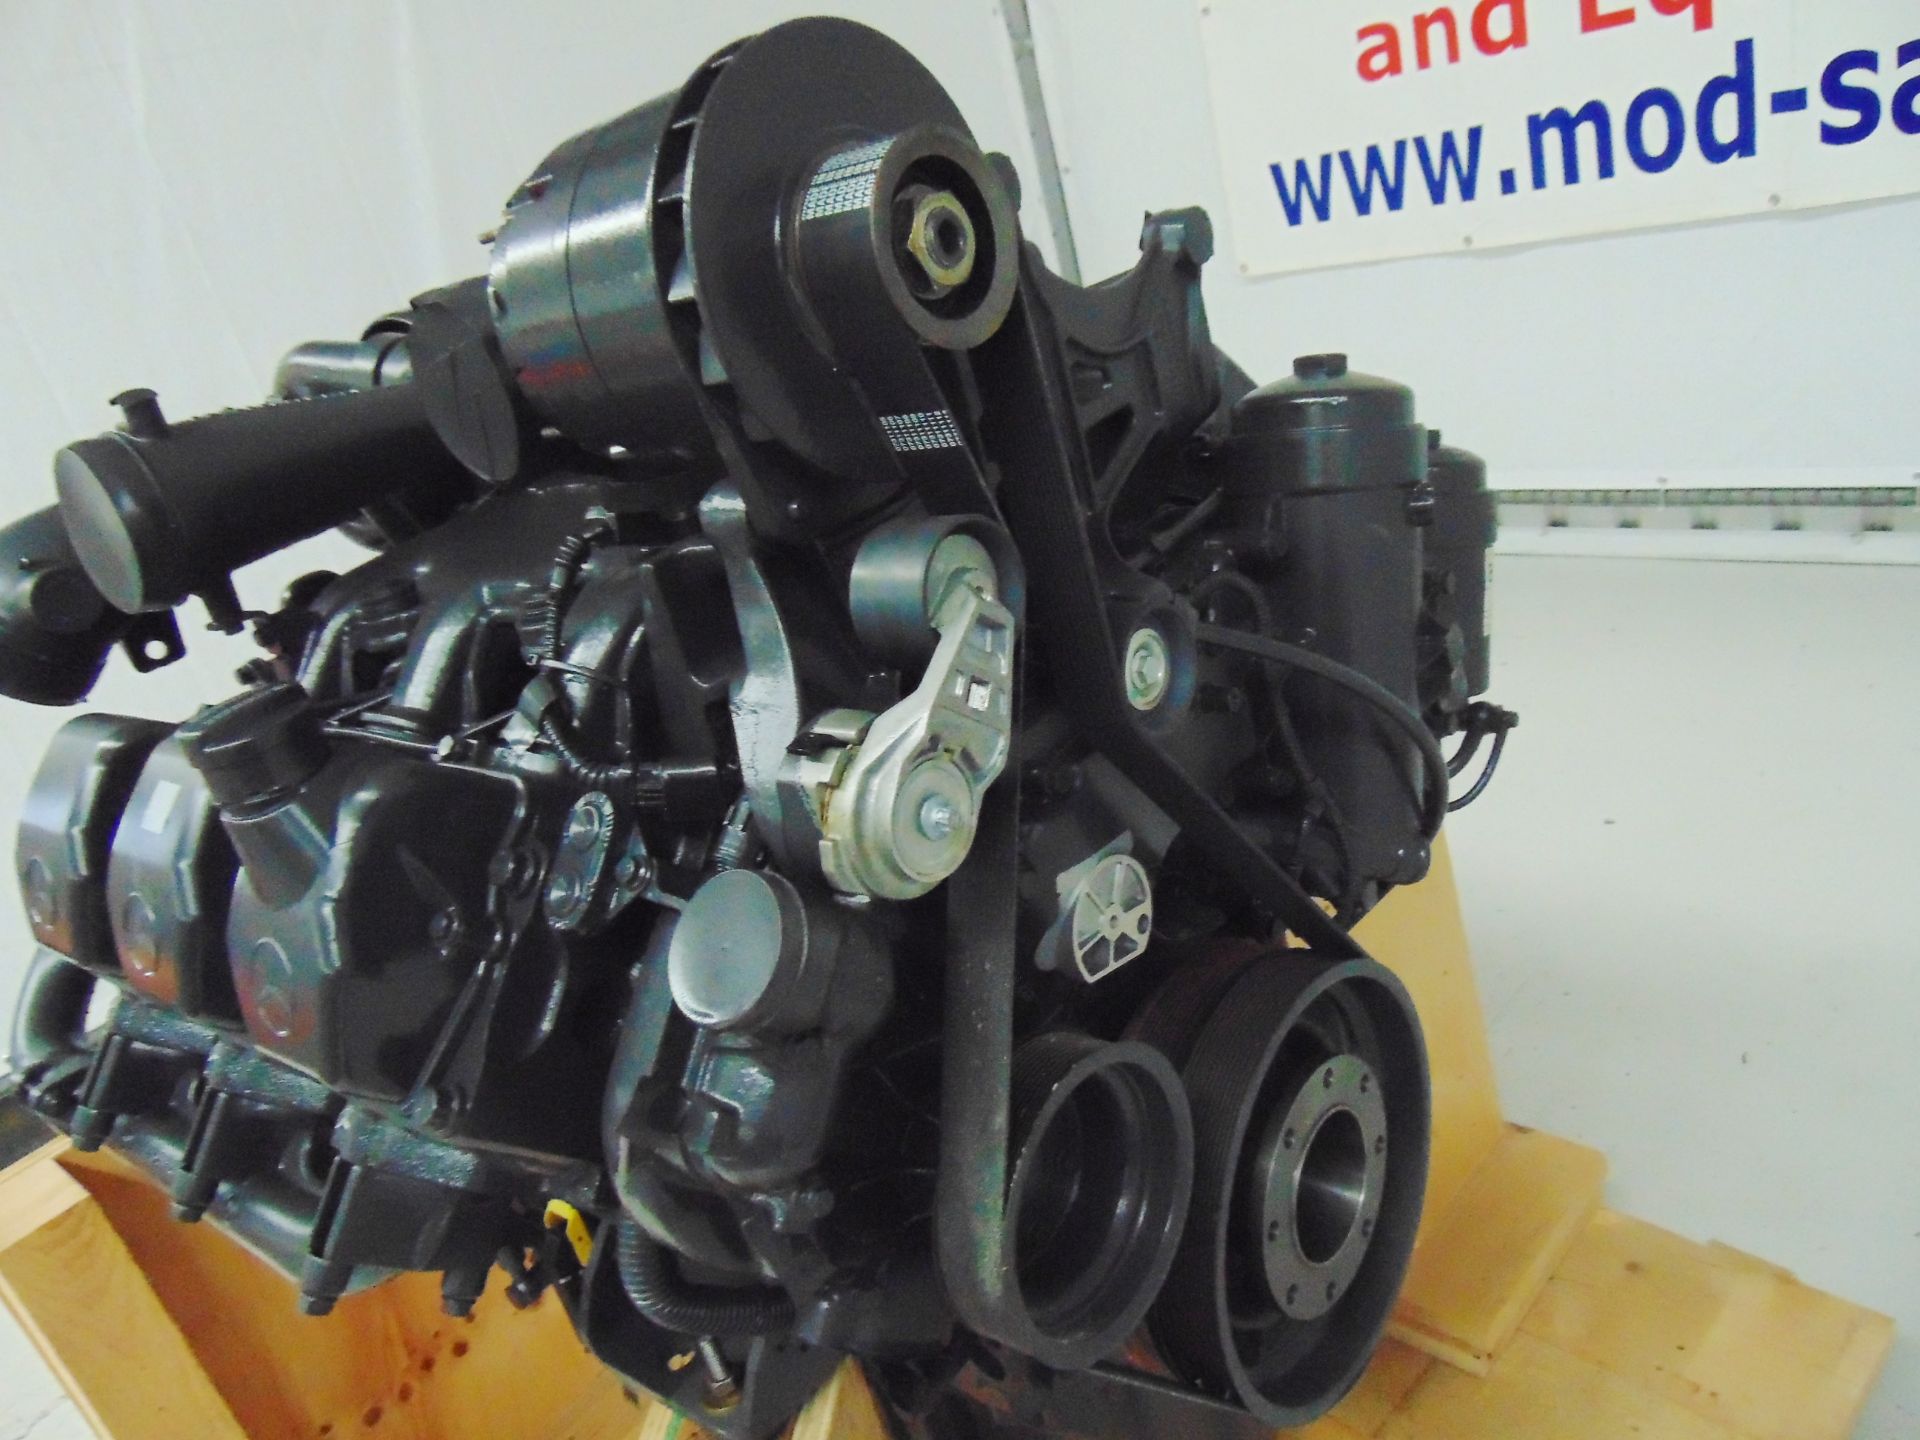 Factory Reconditioned Mercedes-Benz OM501LA V6 Turbo Diesel Engine - Image 13 of 20